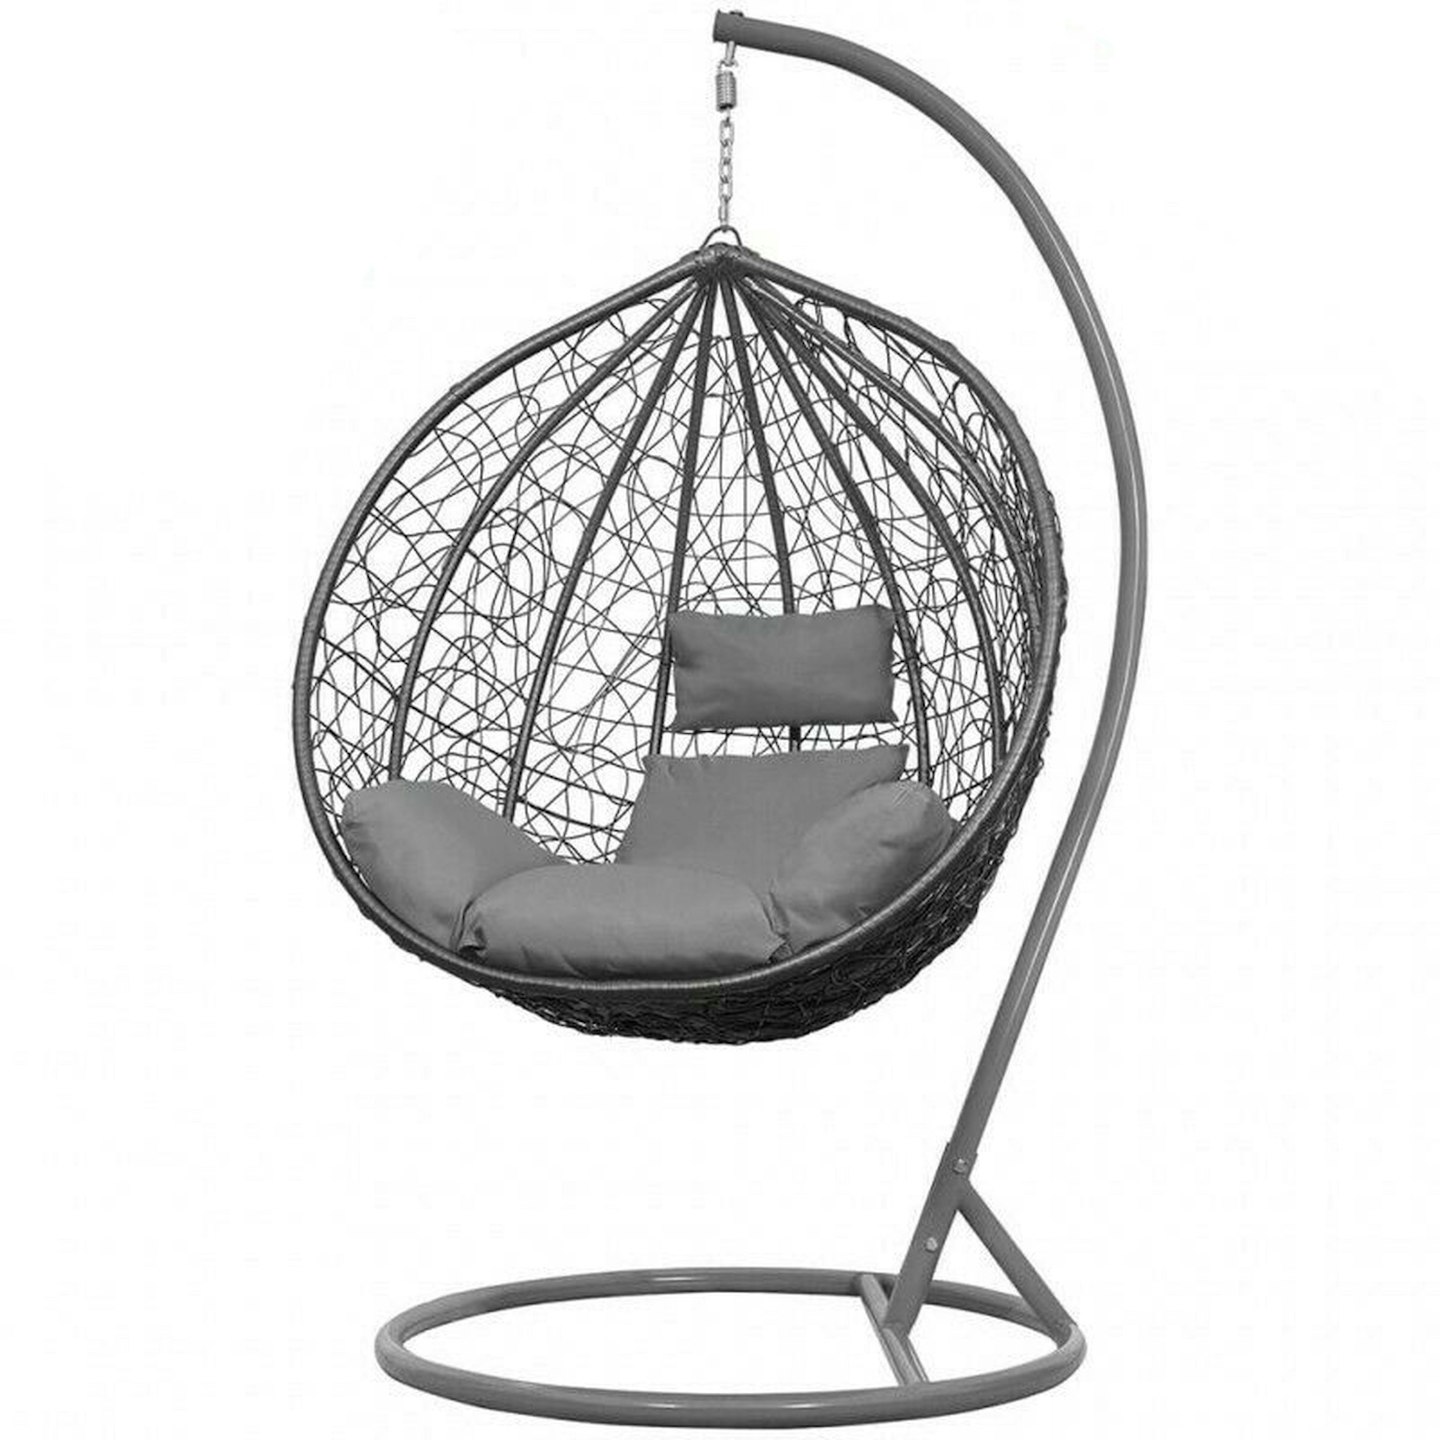 The Sardana Large Hanging Swing Pod Egg Chair - Grey, £249